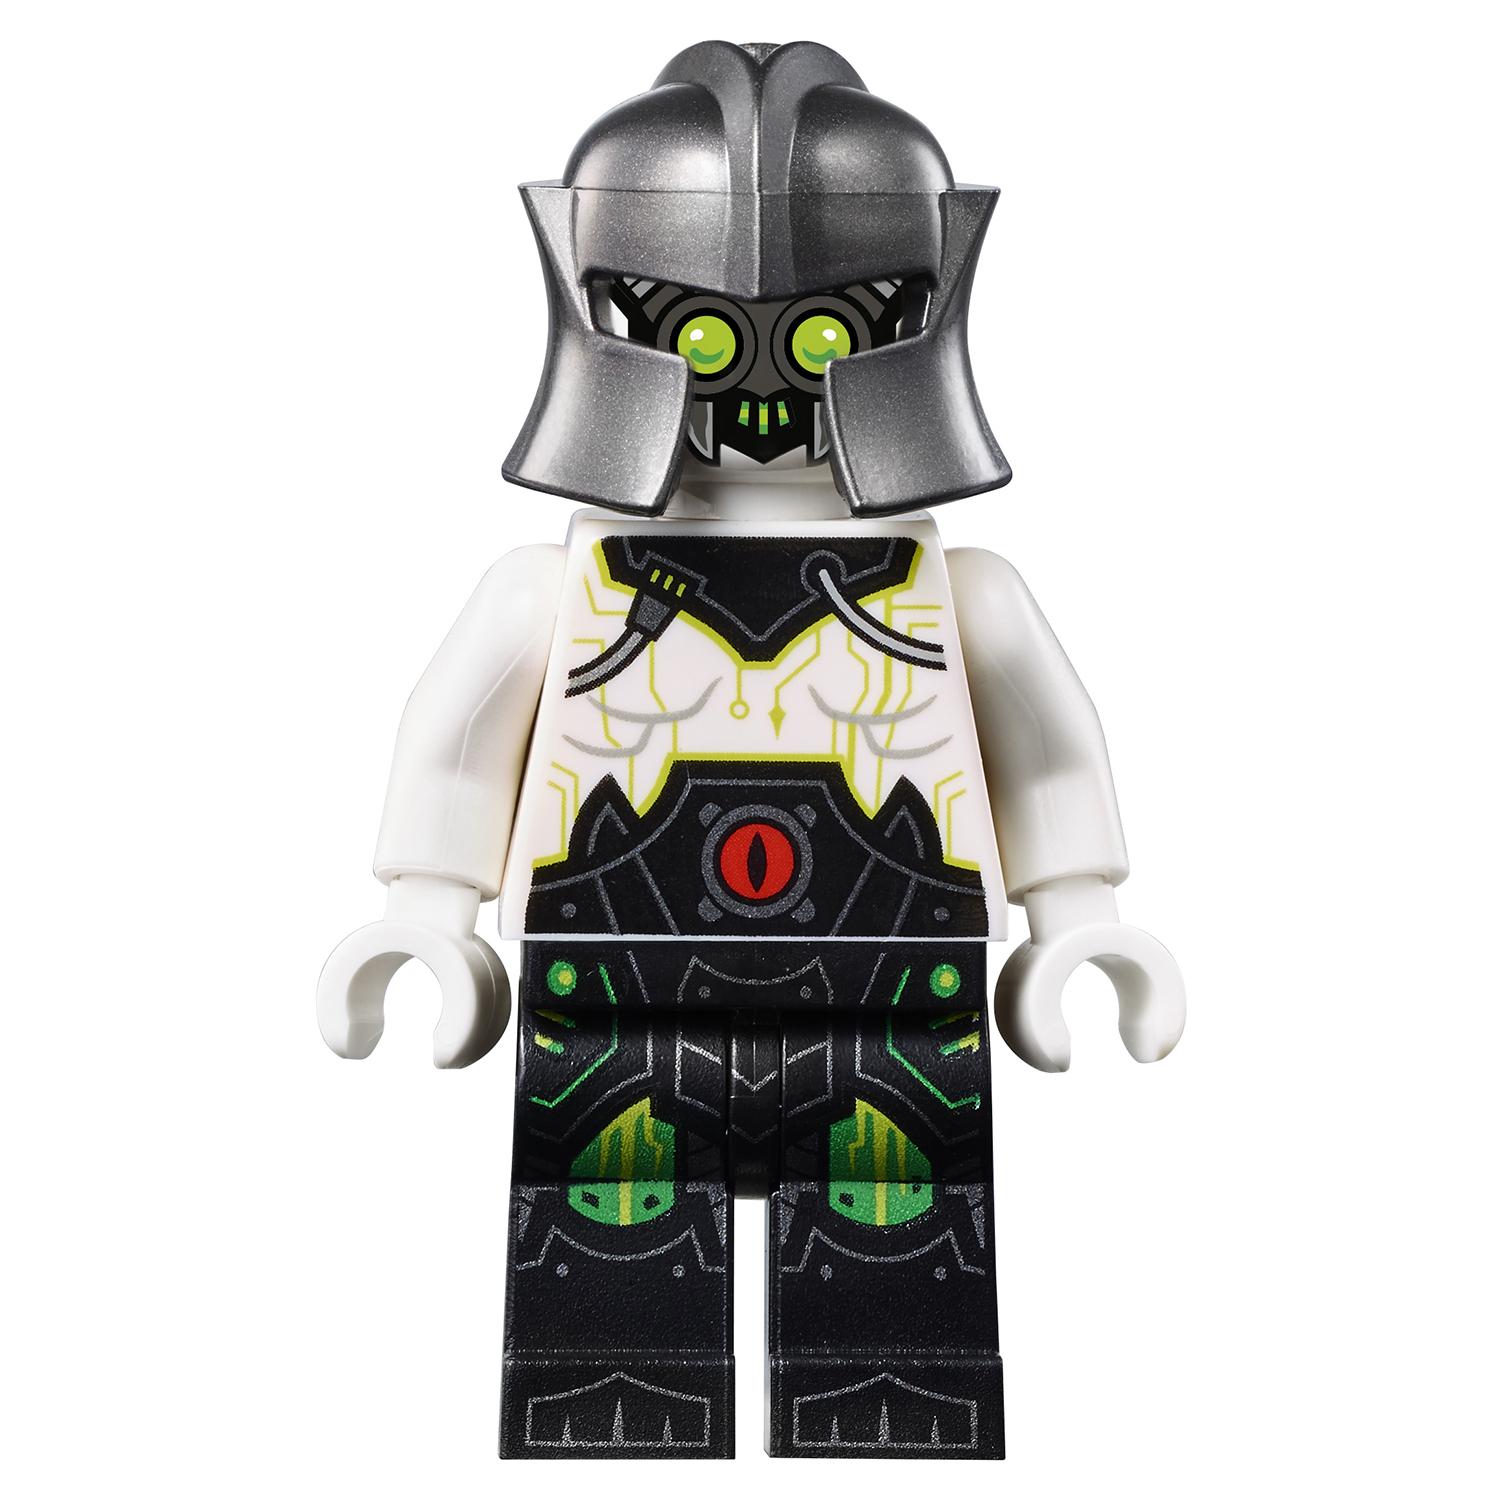 Lego Nexo Knights 72006 Мобильный арсенал Акселя